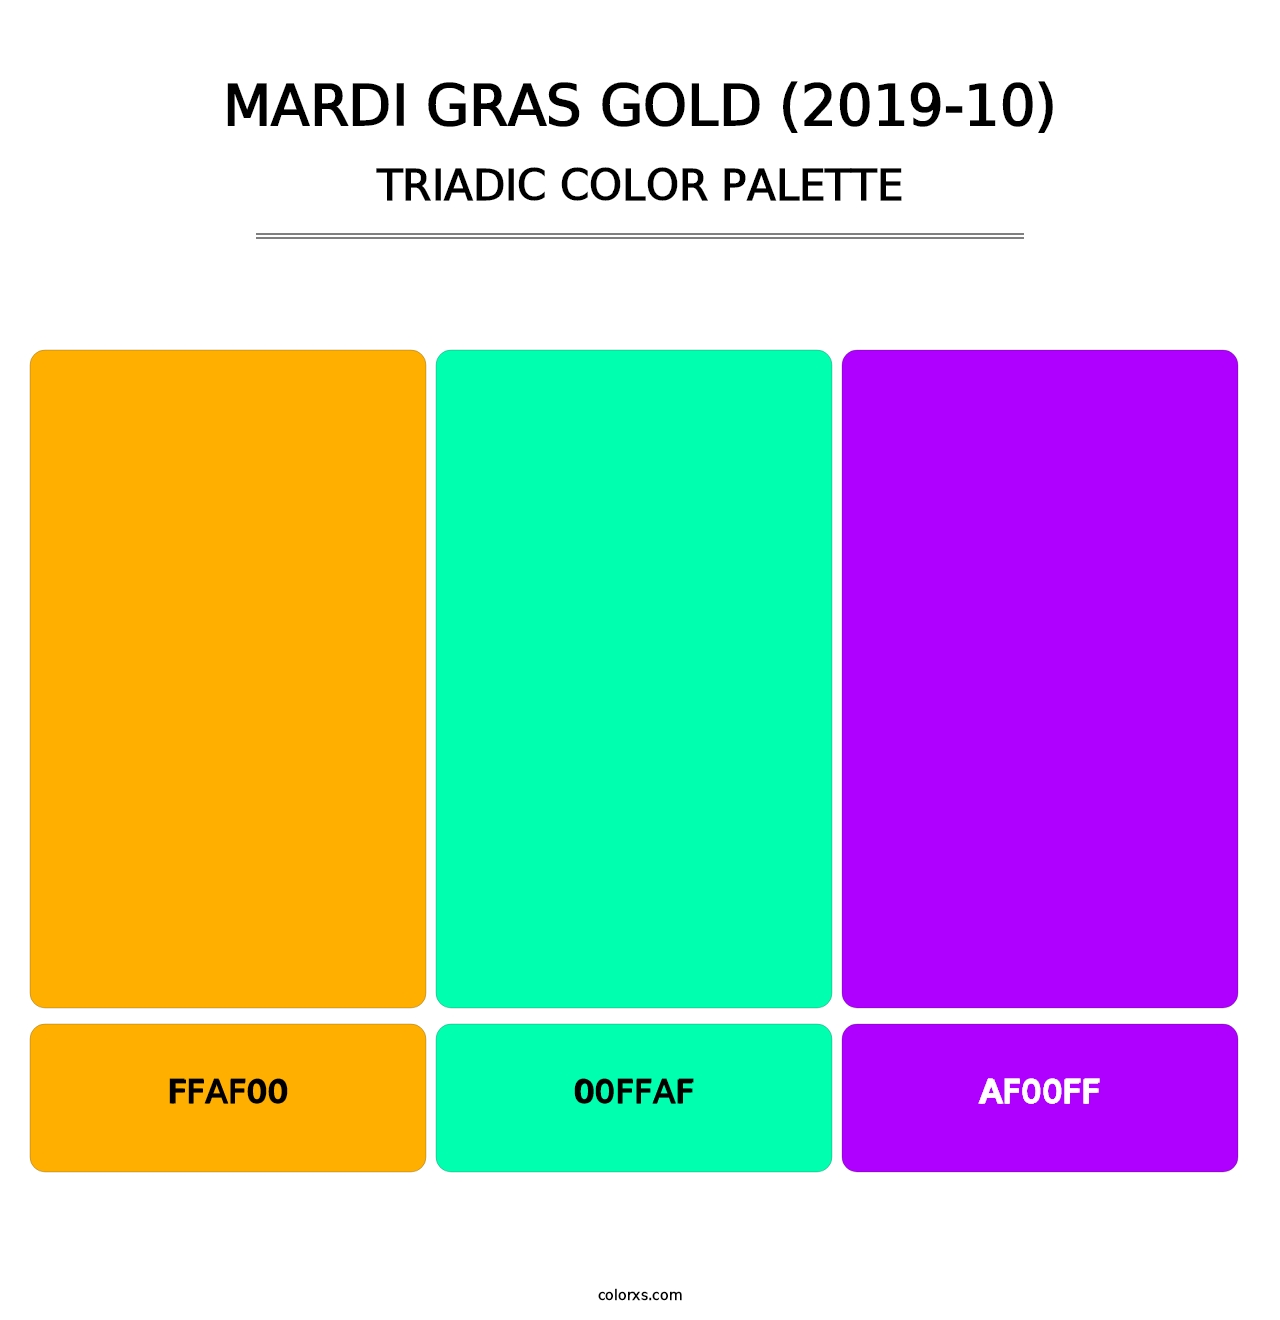 Mardi Gras Gold (2019-10) - Triadic Color Palette